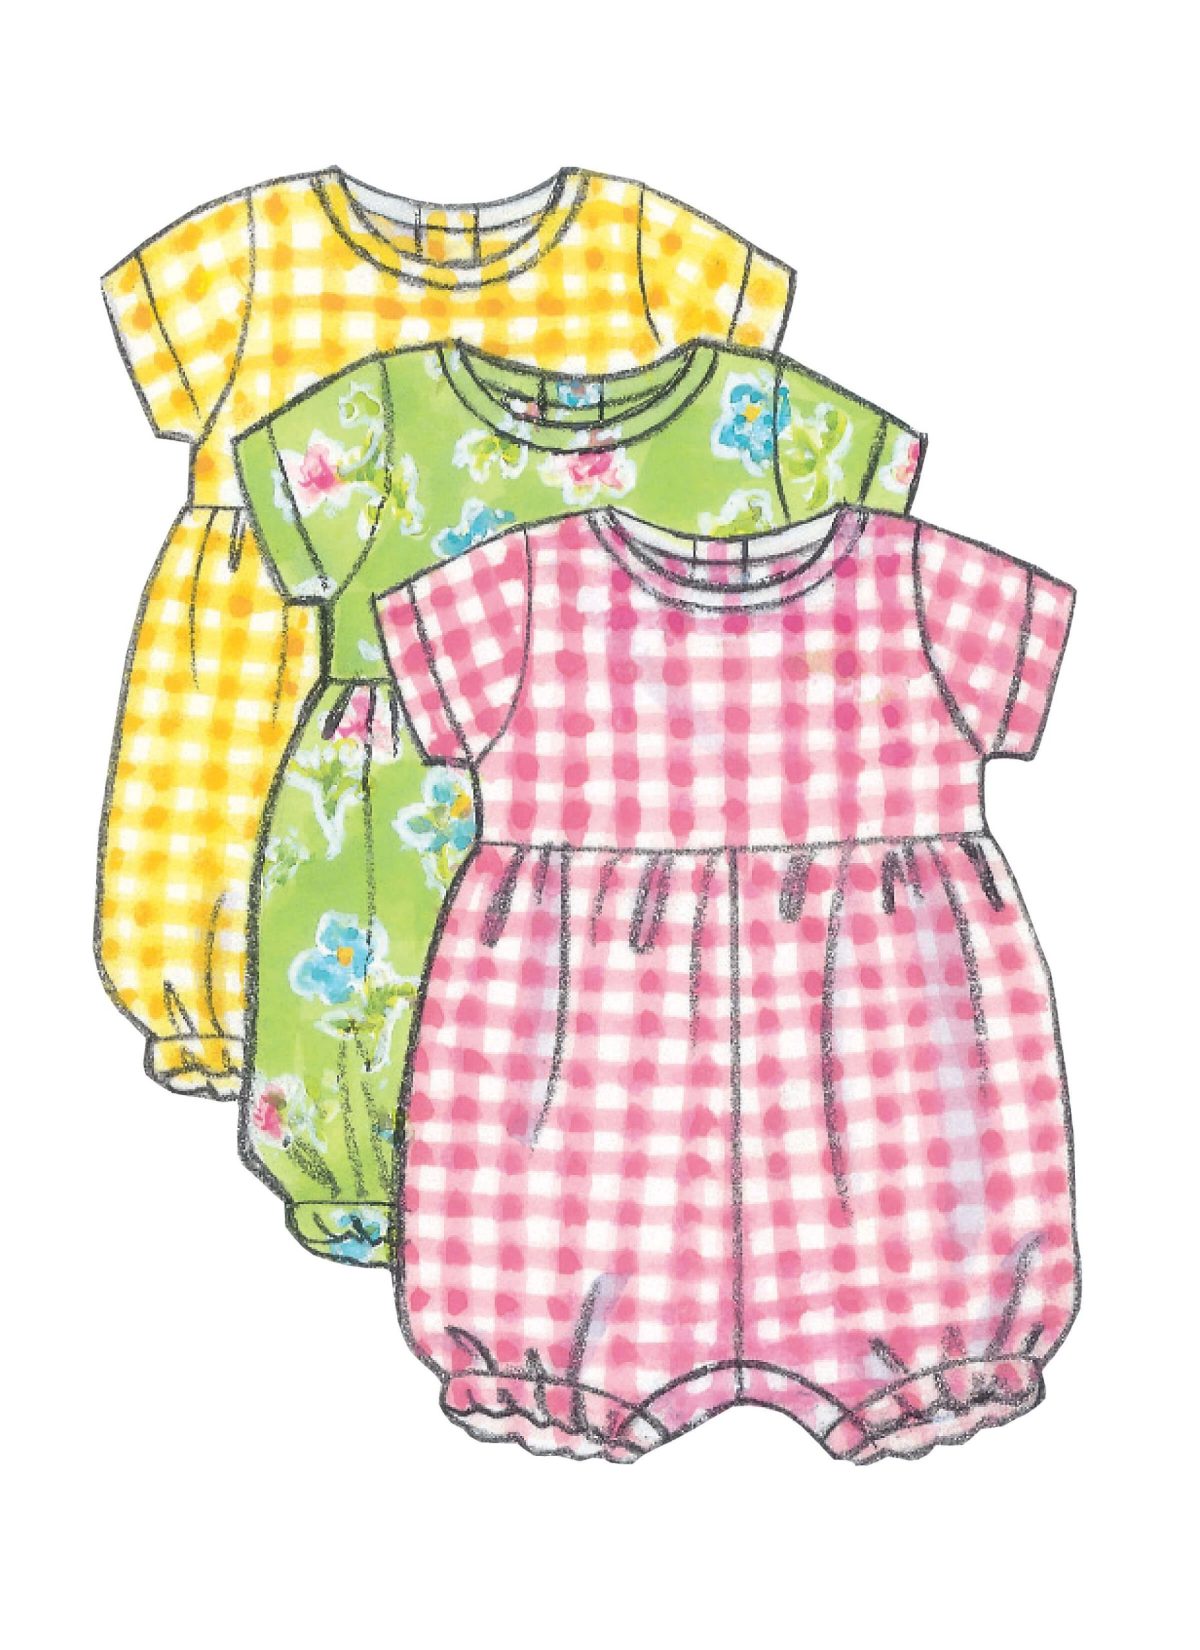 Butterick Sewing Pattern B5624 Infants' Dress, Jumper, Romper, Jumpsuit, Panties, Hat and Bag